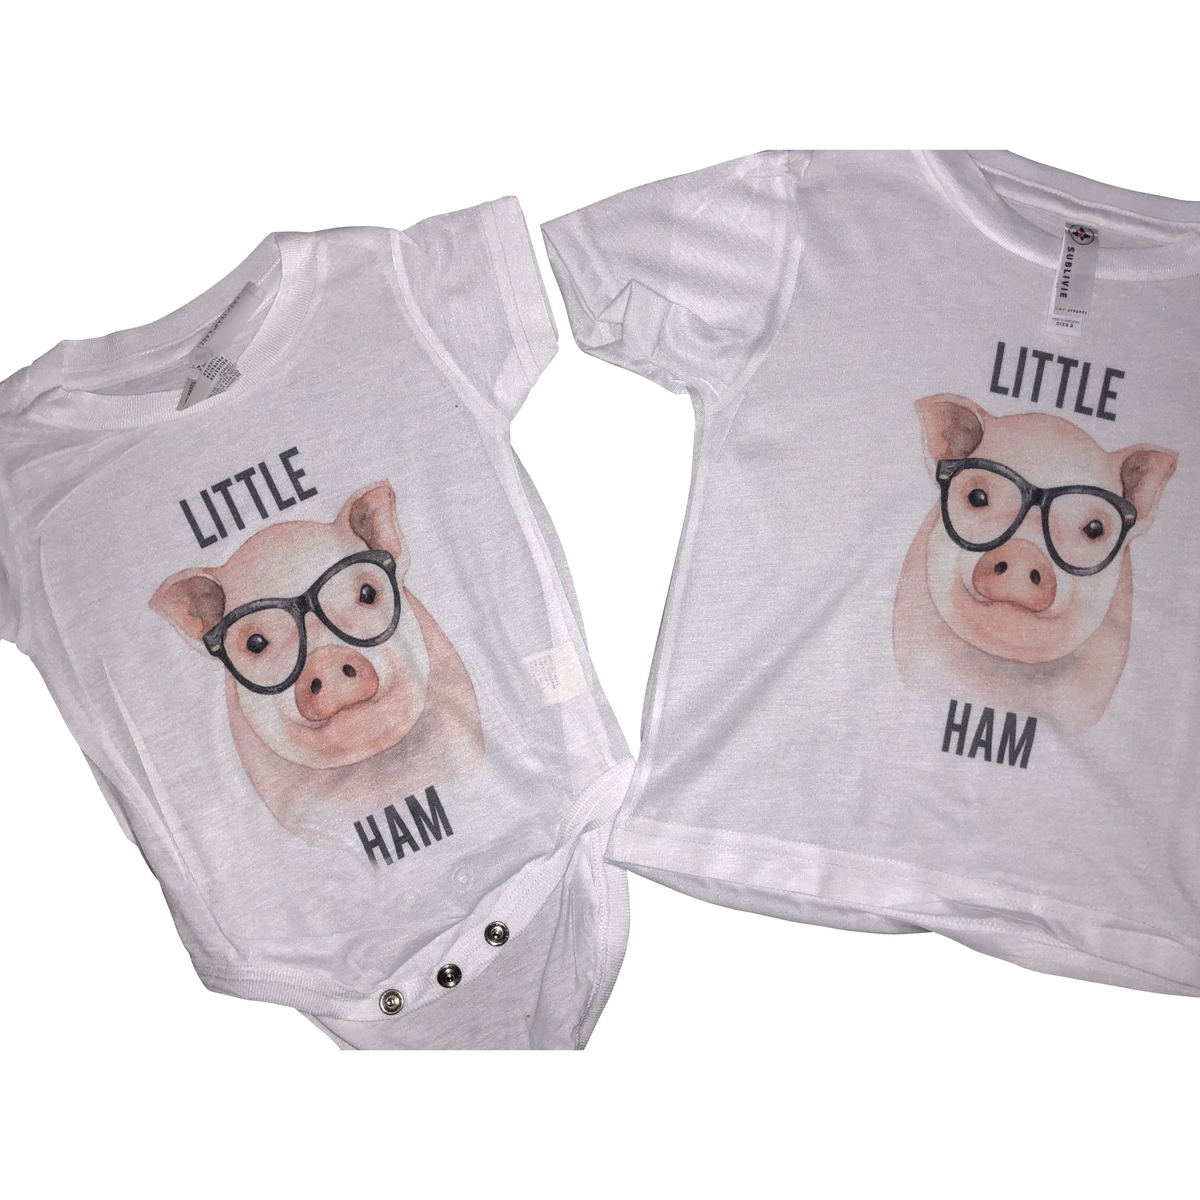 Little ham tee/onesie - Gabriel Clothing Company